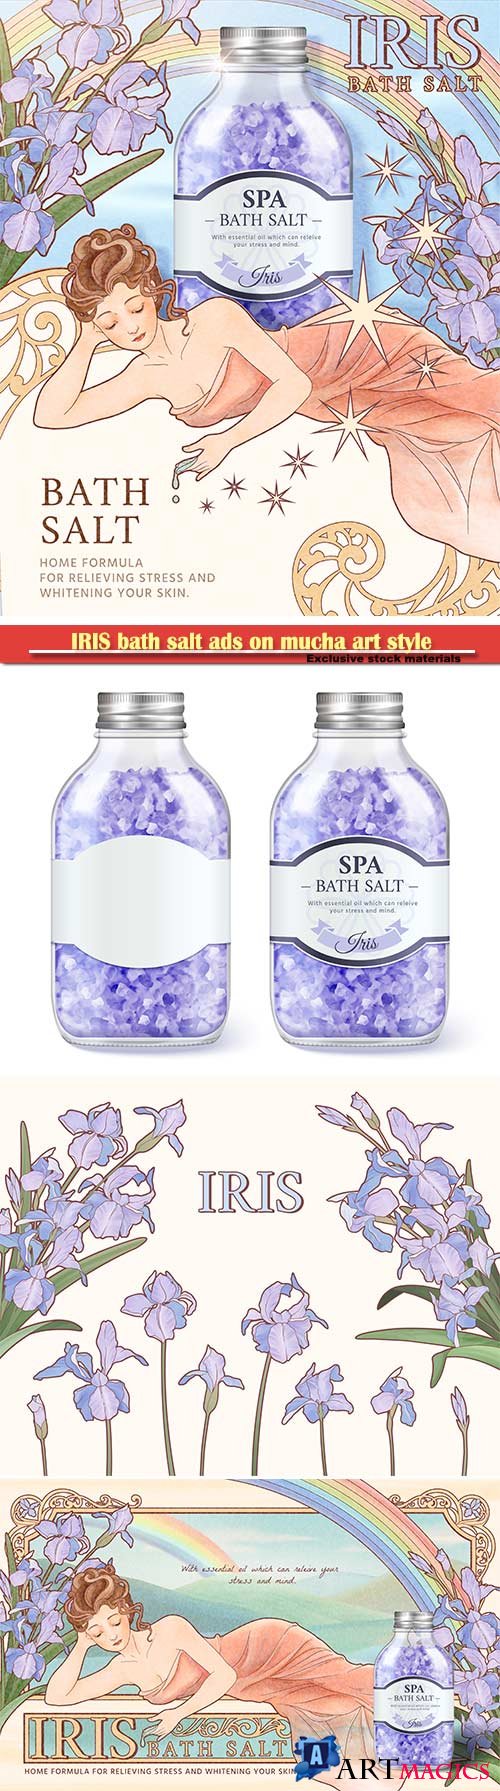 IRIS bath salt ads on mucha art style background, woman side lying with purple flowers